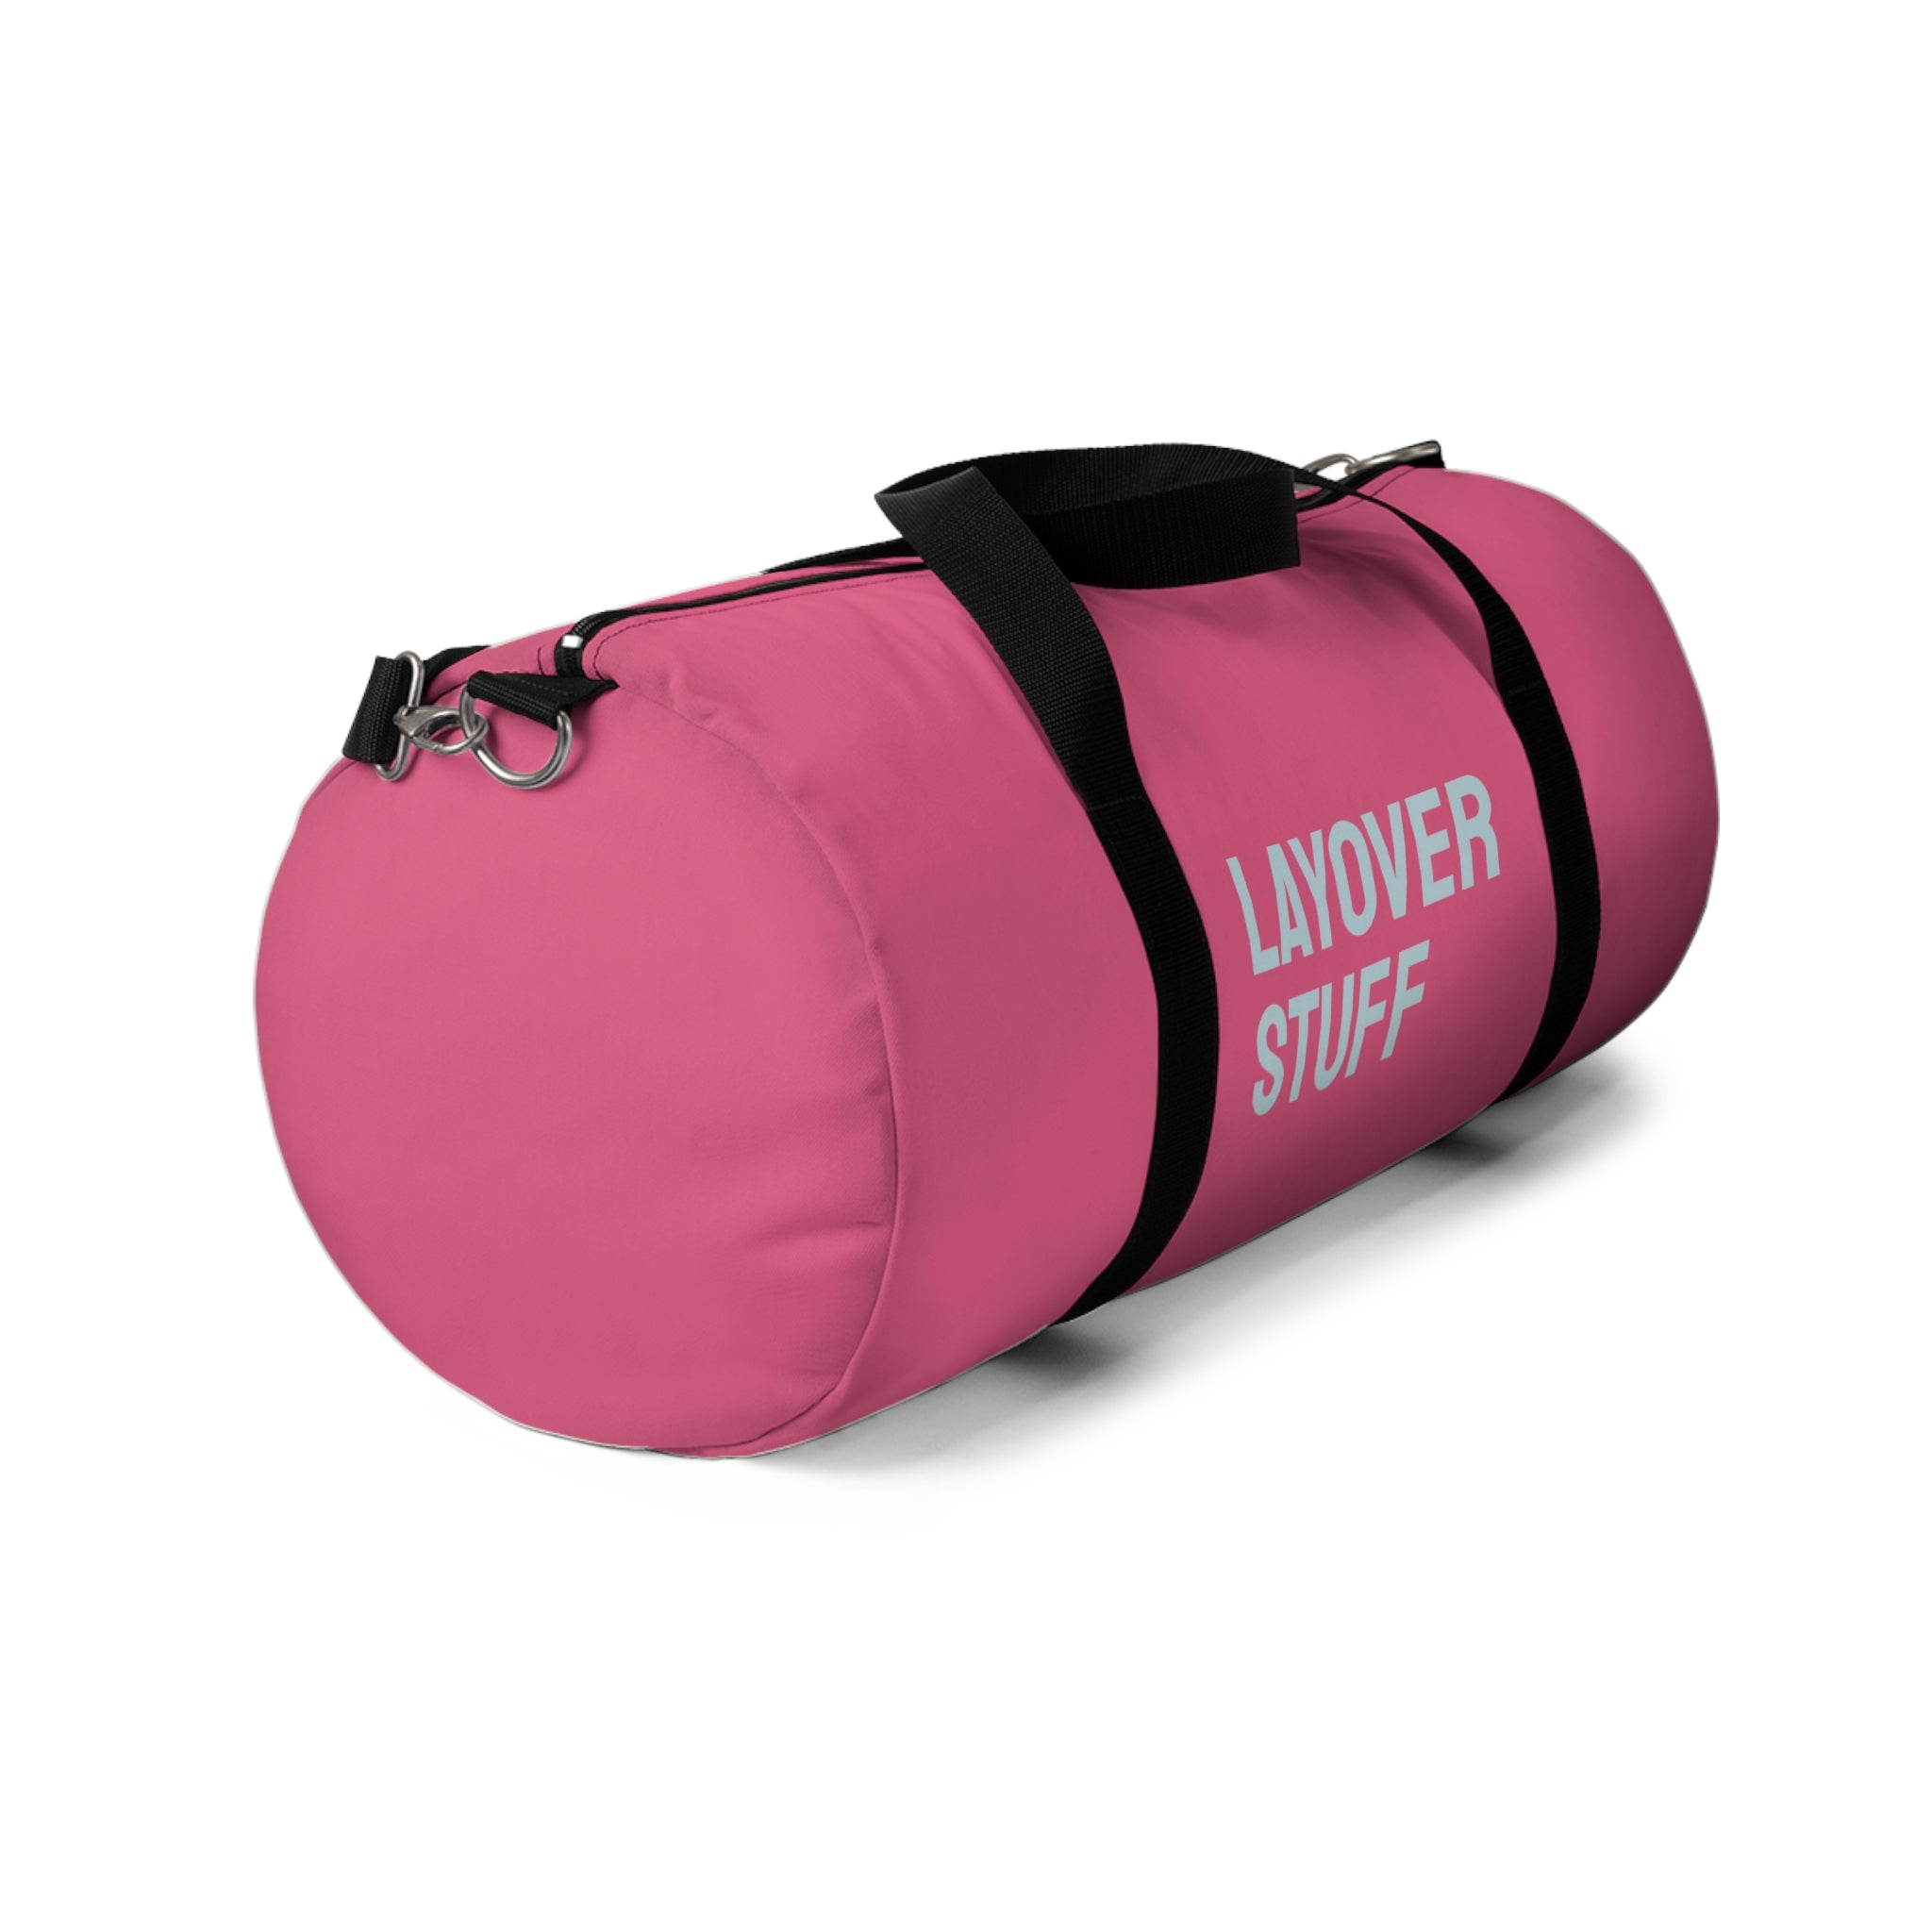 Layover stuff Duffle Bag (Pink)